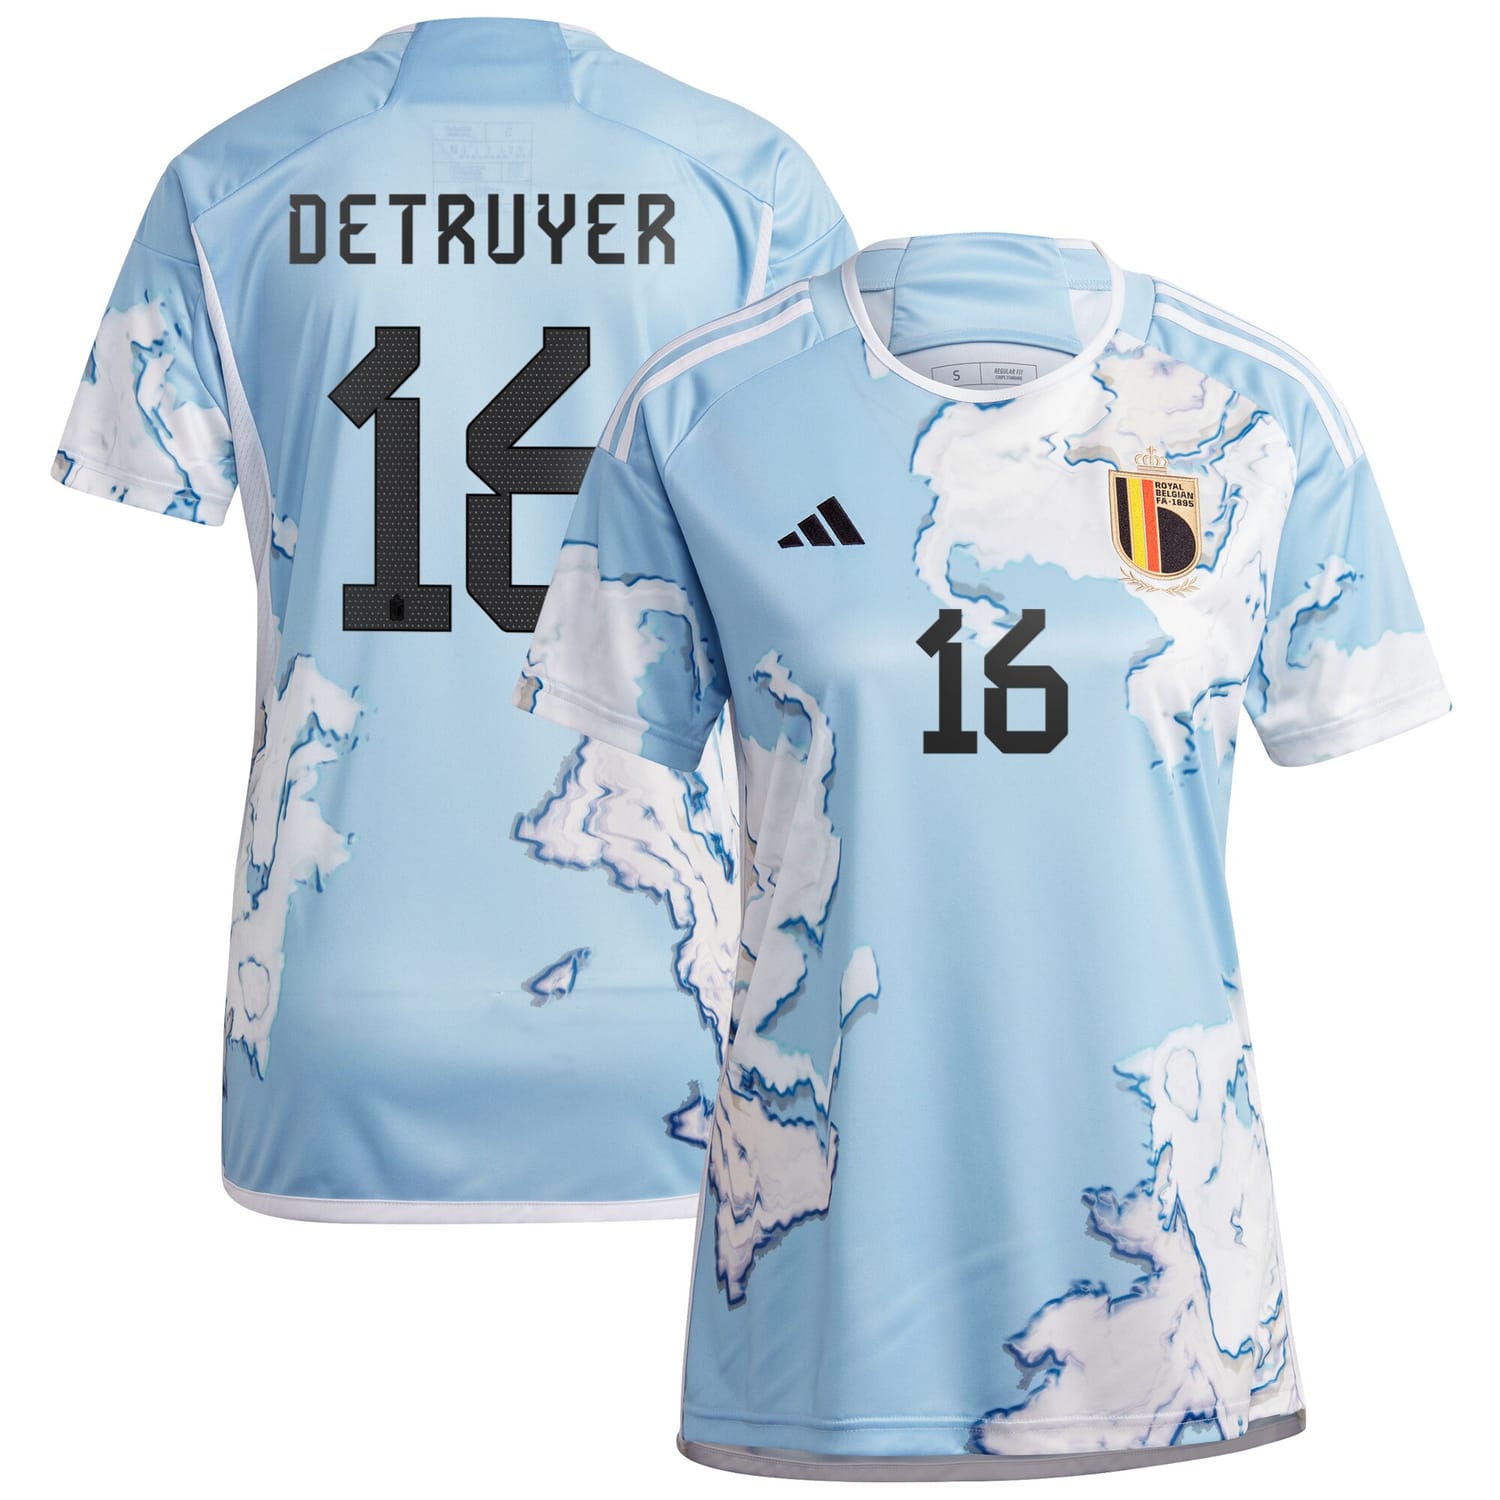 Belgium National Team Away Jersey Shirt 2023 player Marie Detruyer 16 printing for Women